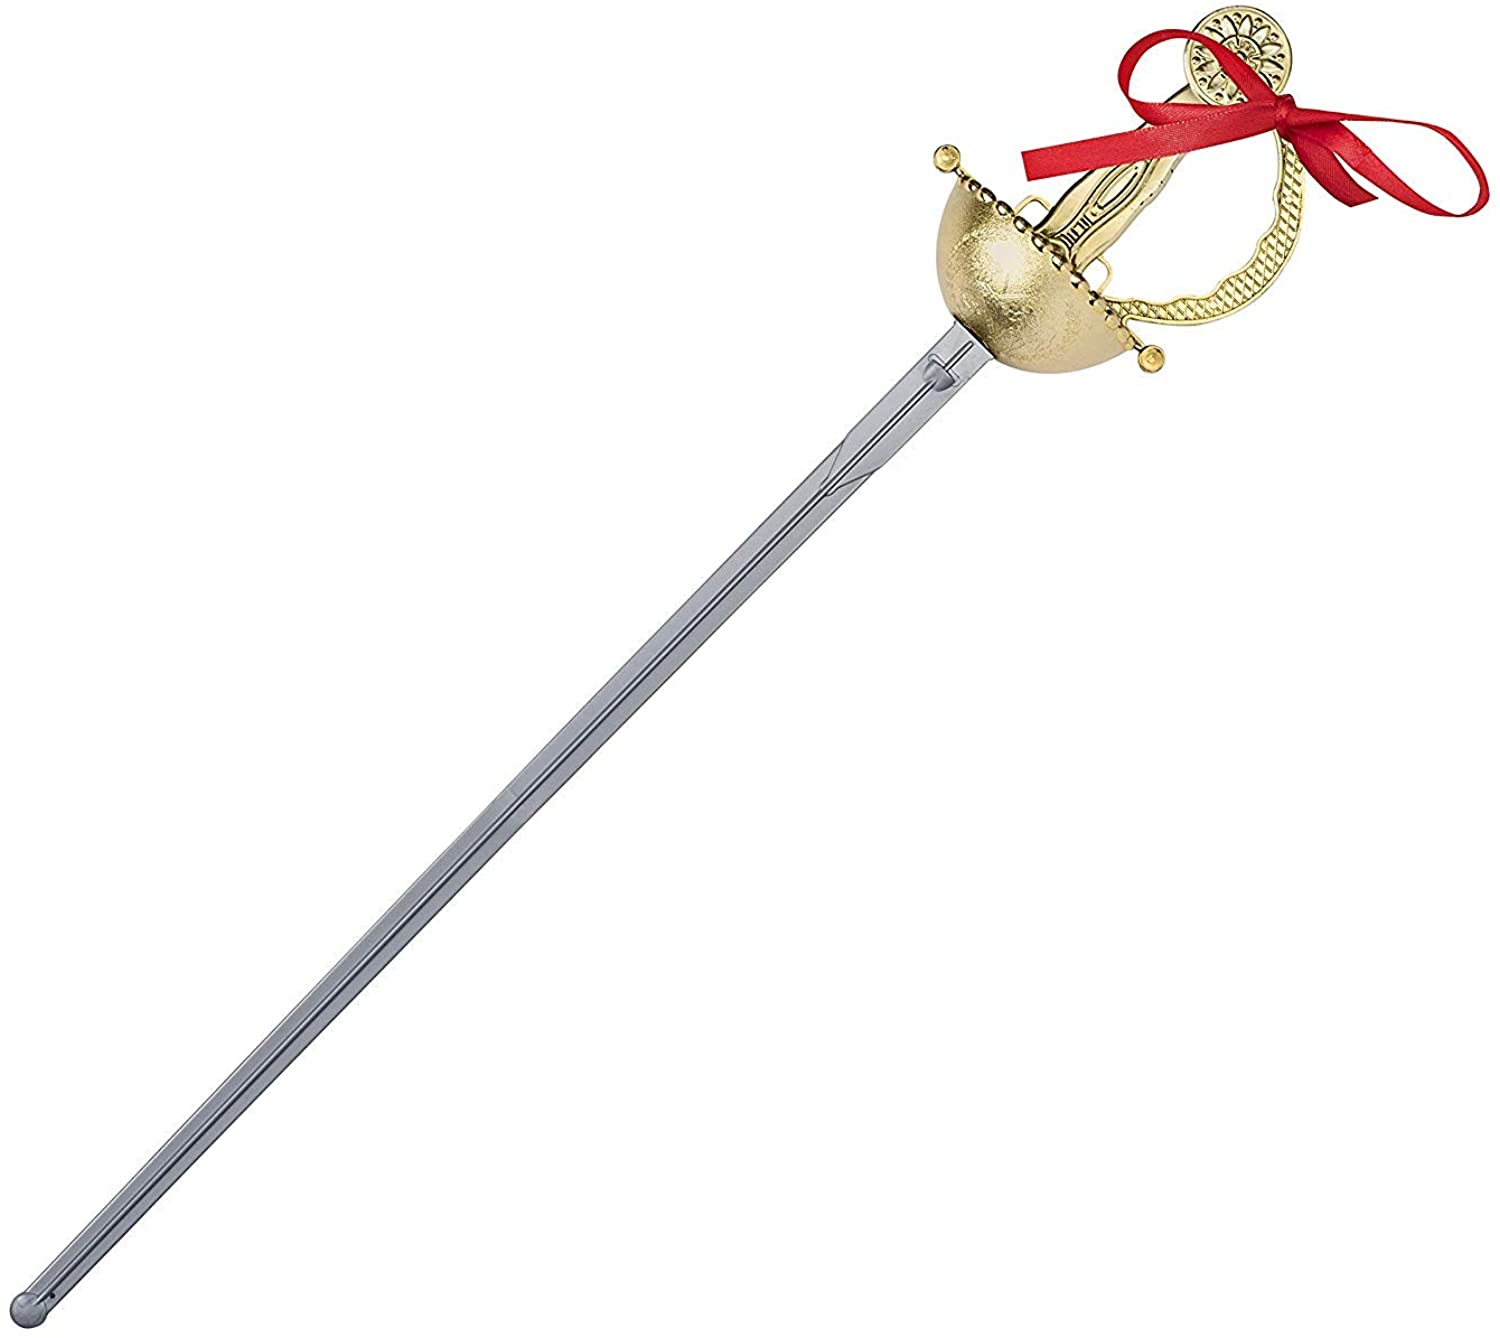 Musketeers Toy Sword